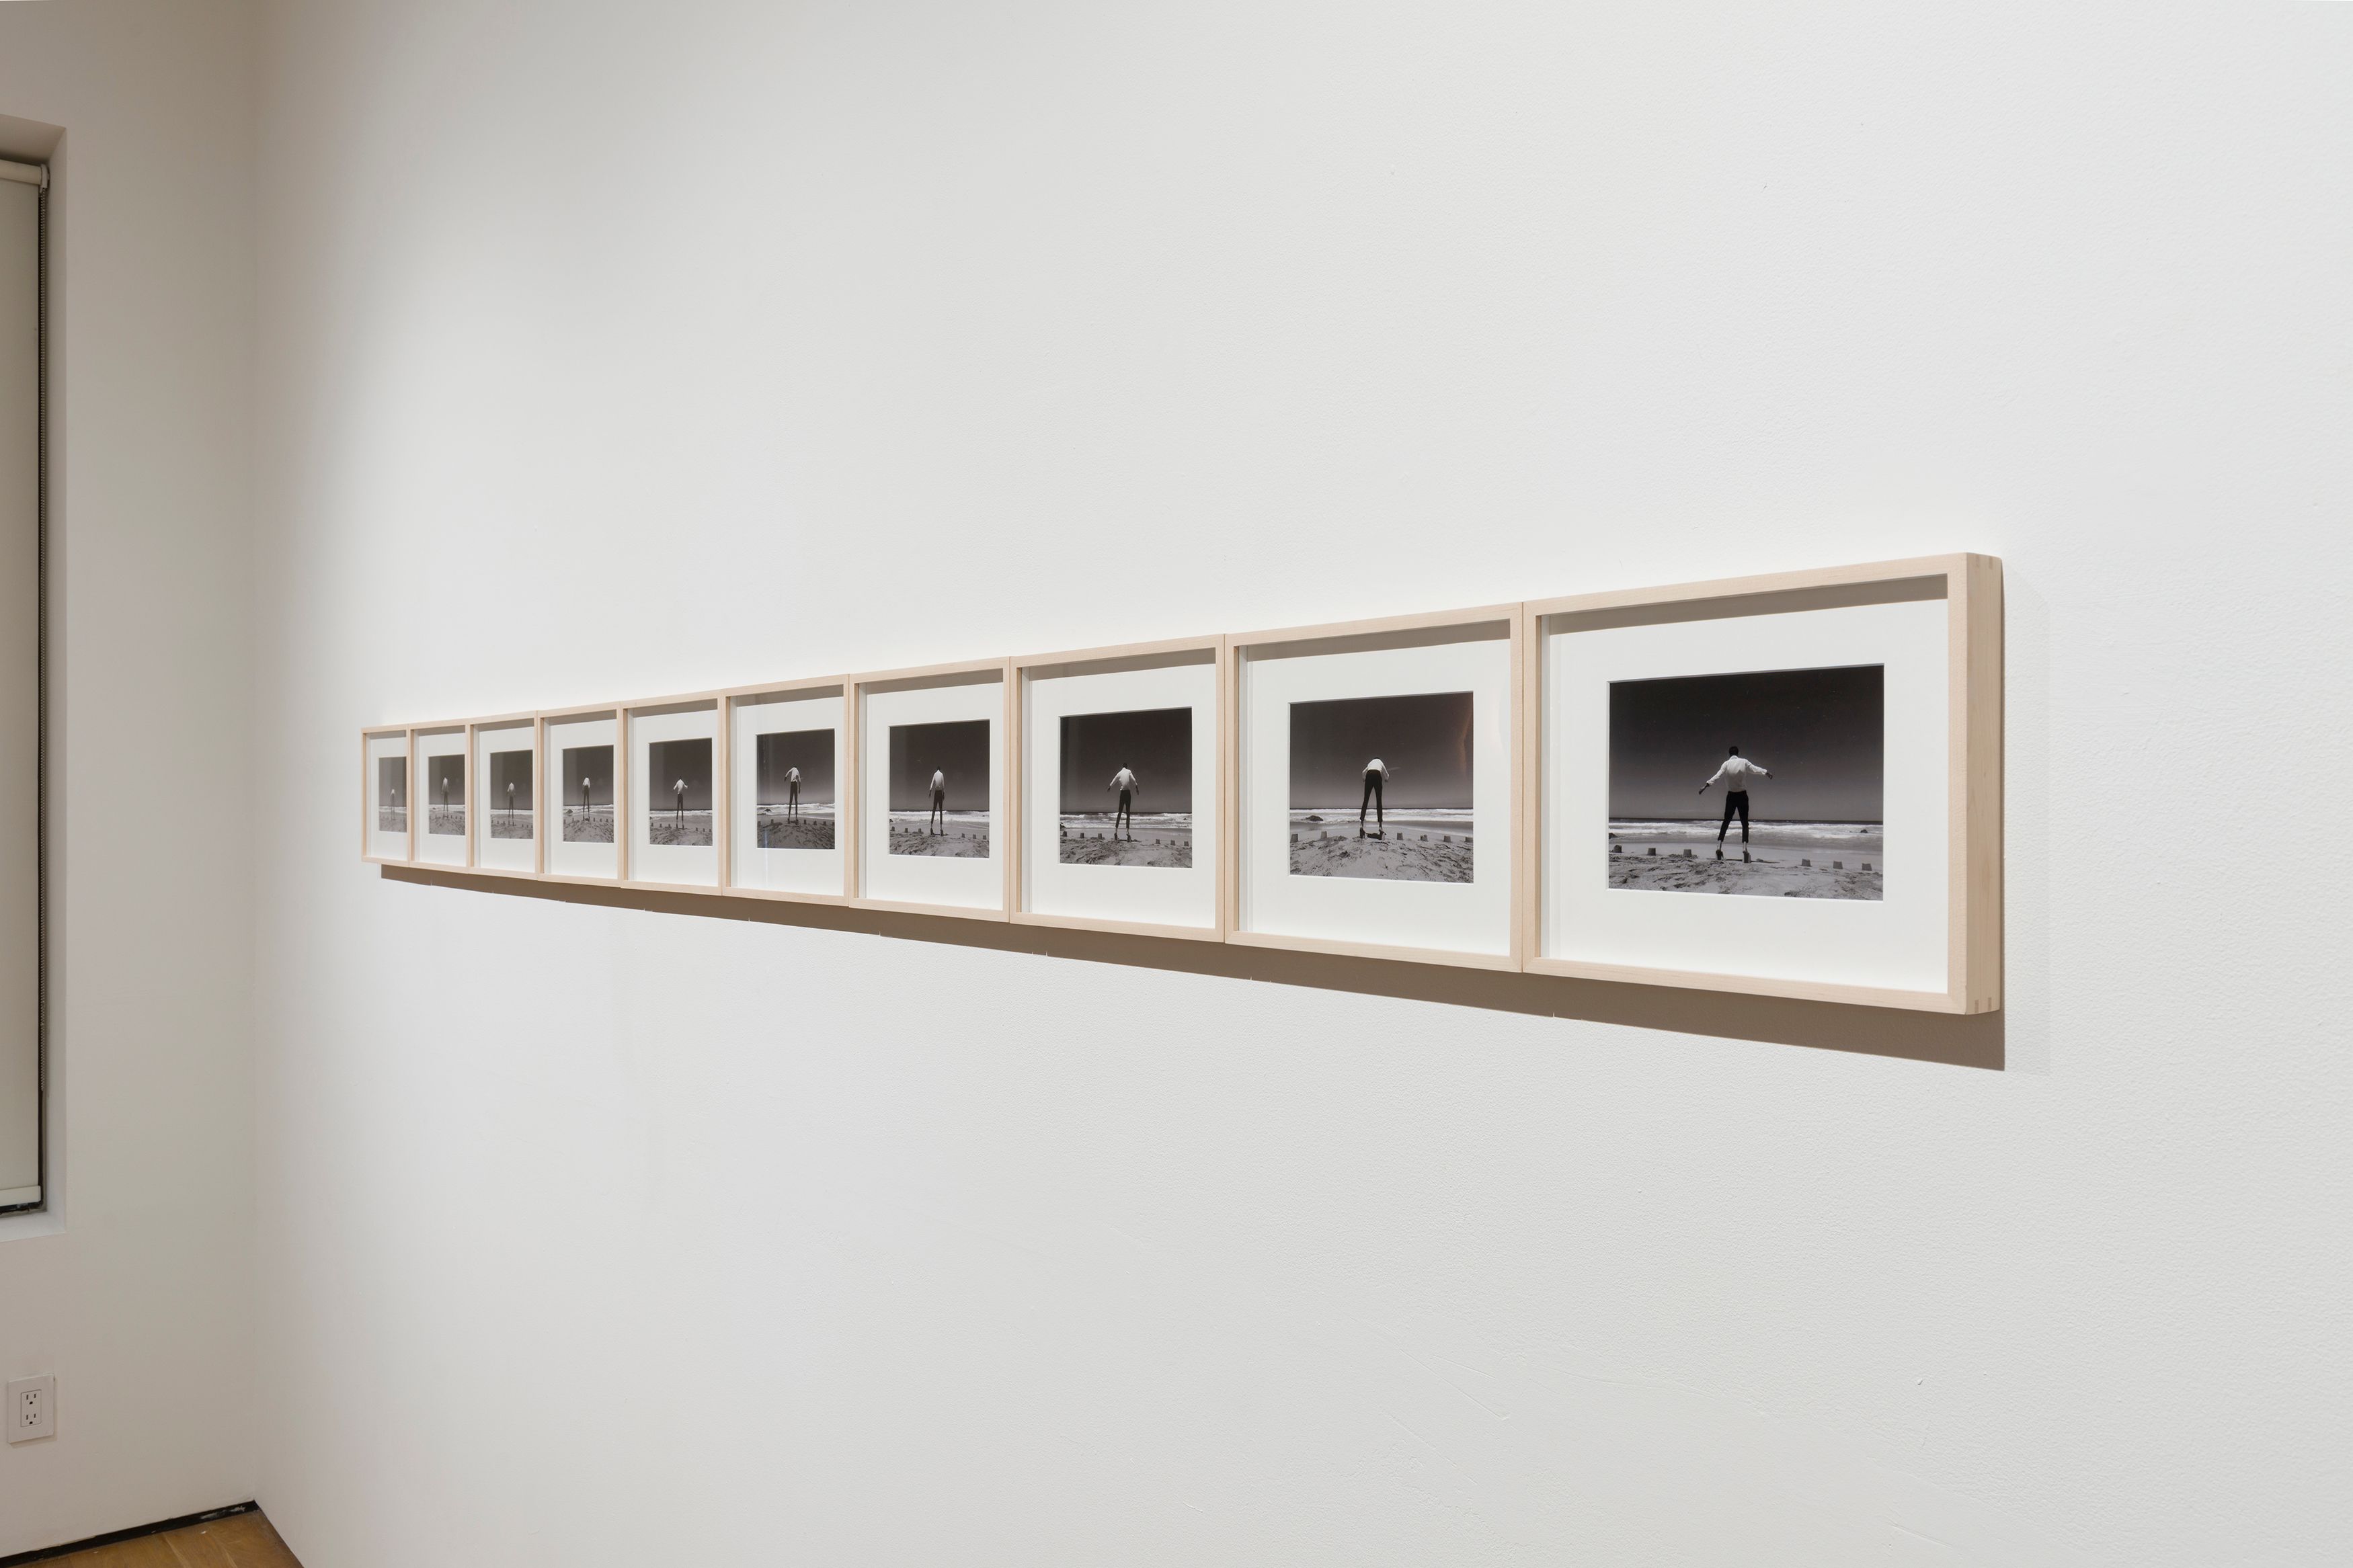 Rafal Bujnowski, Sand Castles, 2018 (printed 2022), B&amp;W photograph in ten panels, 18.5 x 12.4 cm each (7 1/4 x 4 7/8 in. each), overall dimensions variable